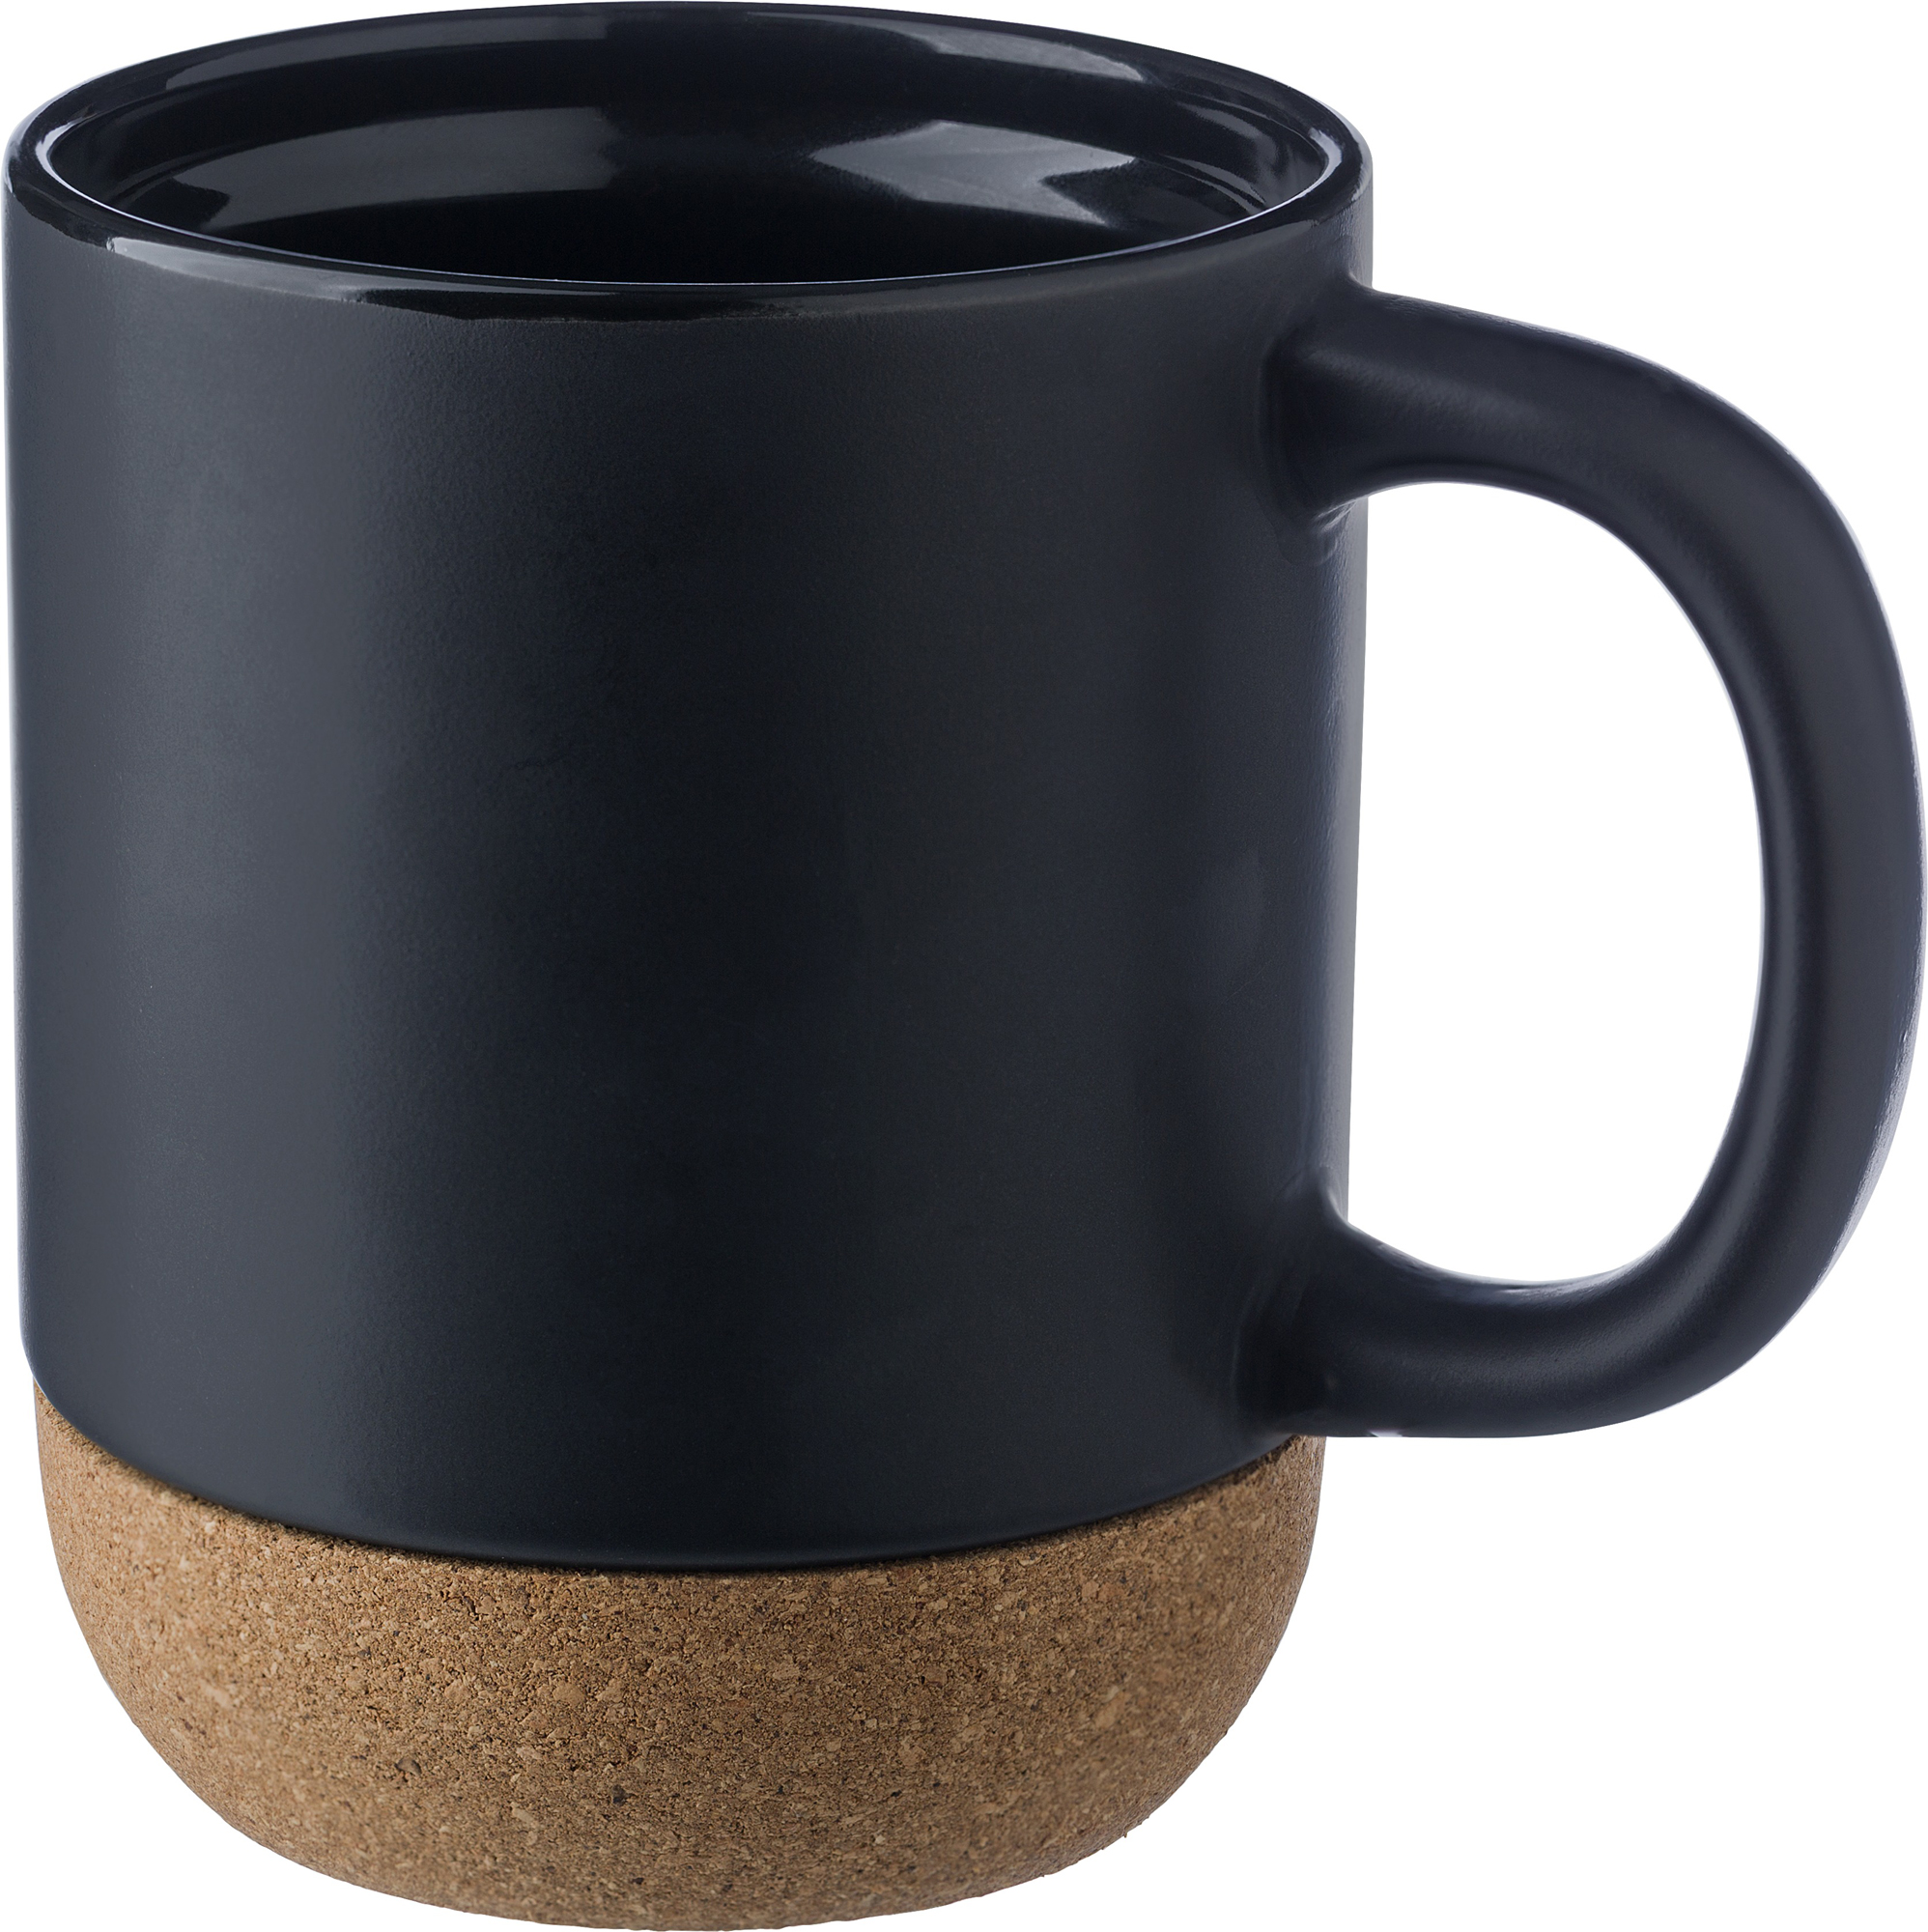 000000864506 001999999 3d045 rgt pro01 2022 fal - Ceramic and cork mug (420ml)